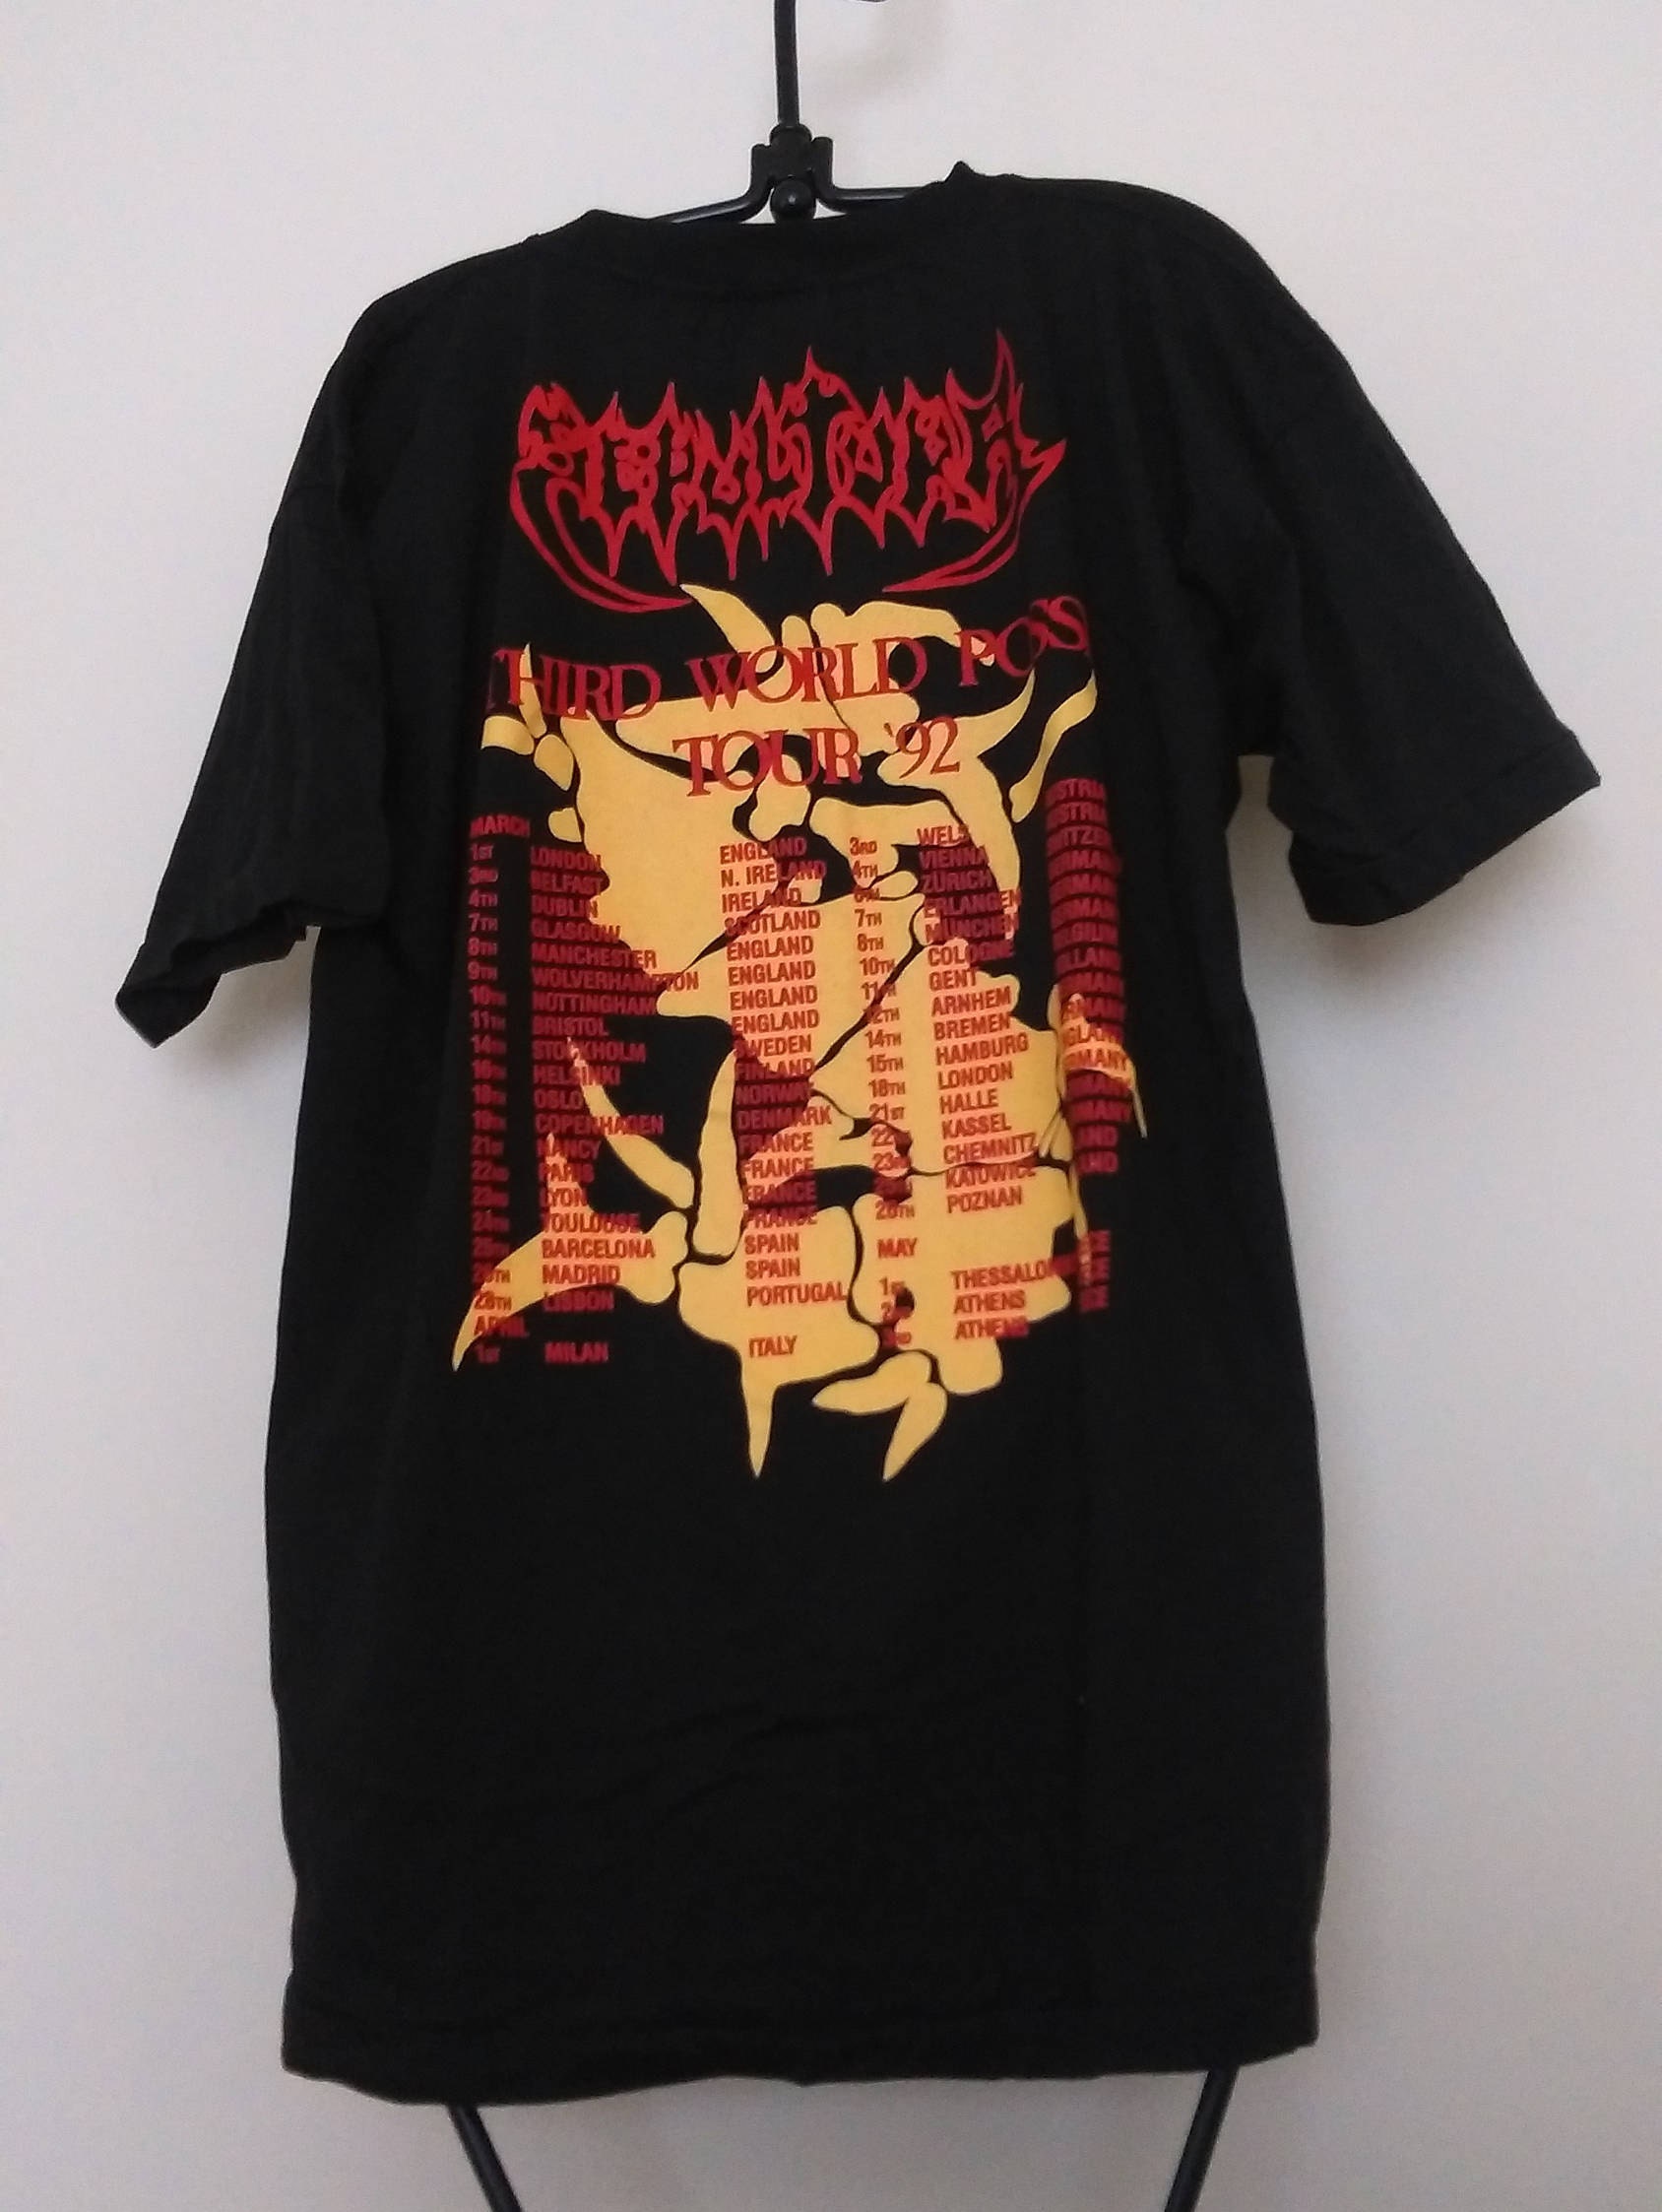 Unused Third World T-shirt Etsy Tour Posse Sepultura \'92 - Vintage